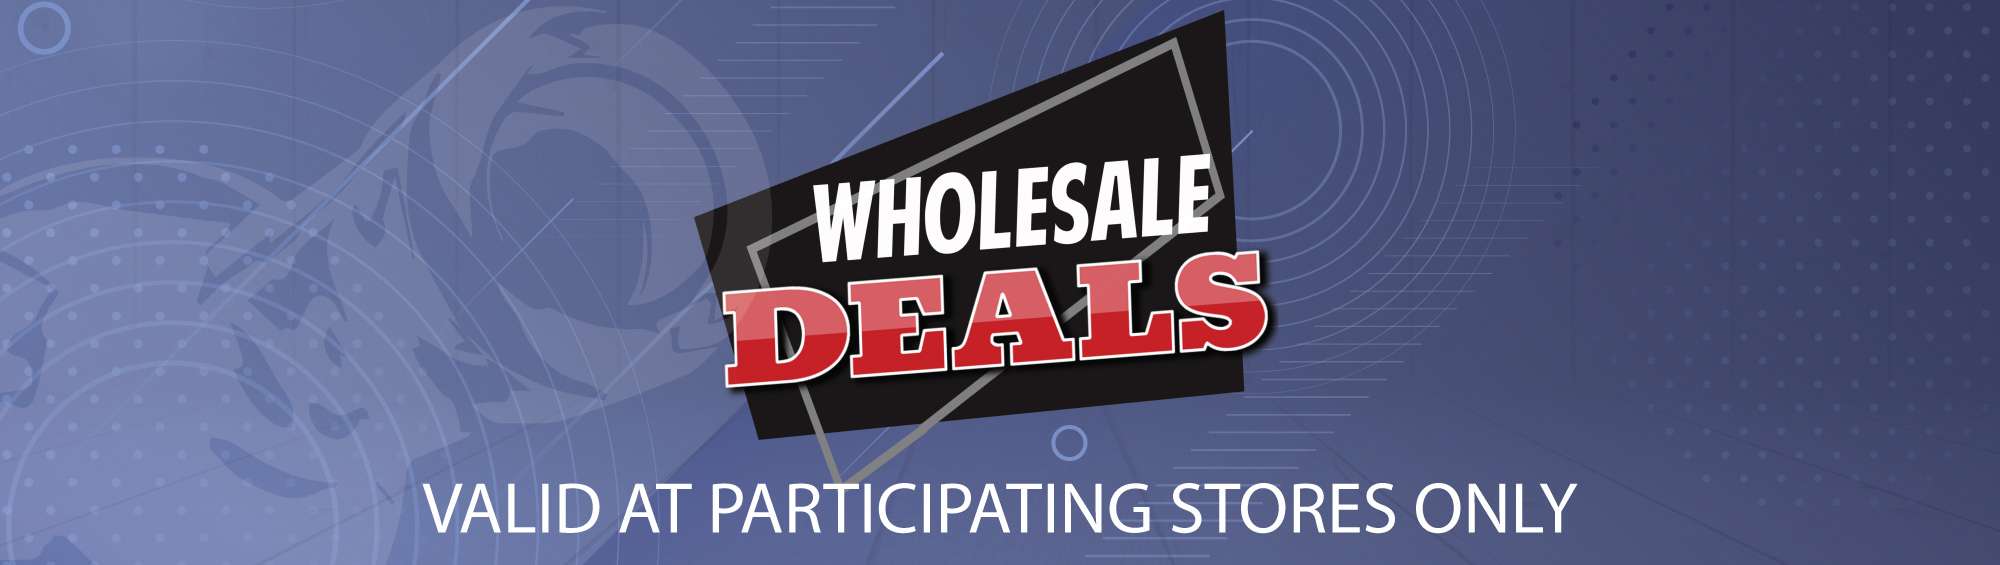 Wholesale Deals Header